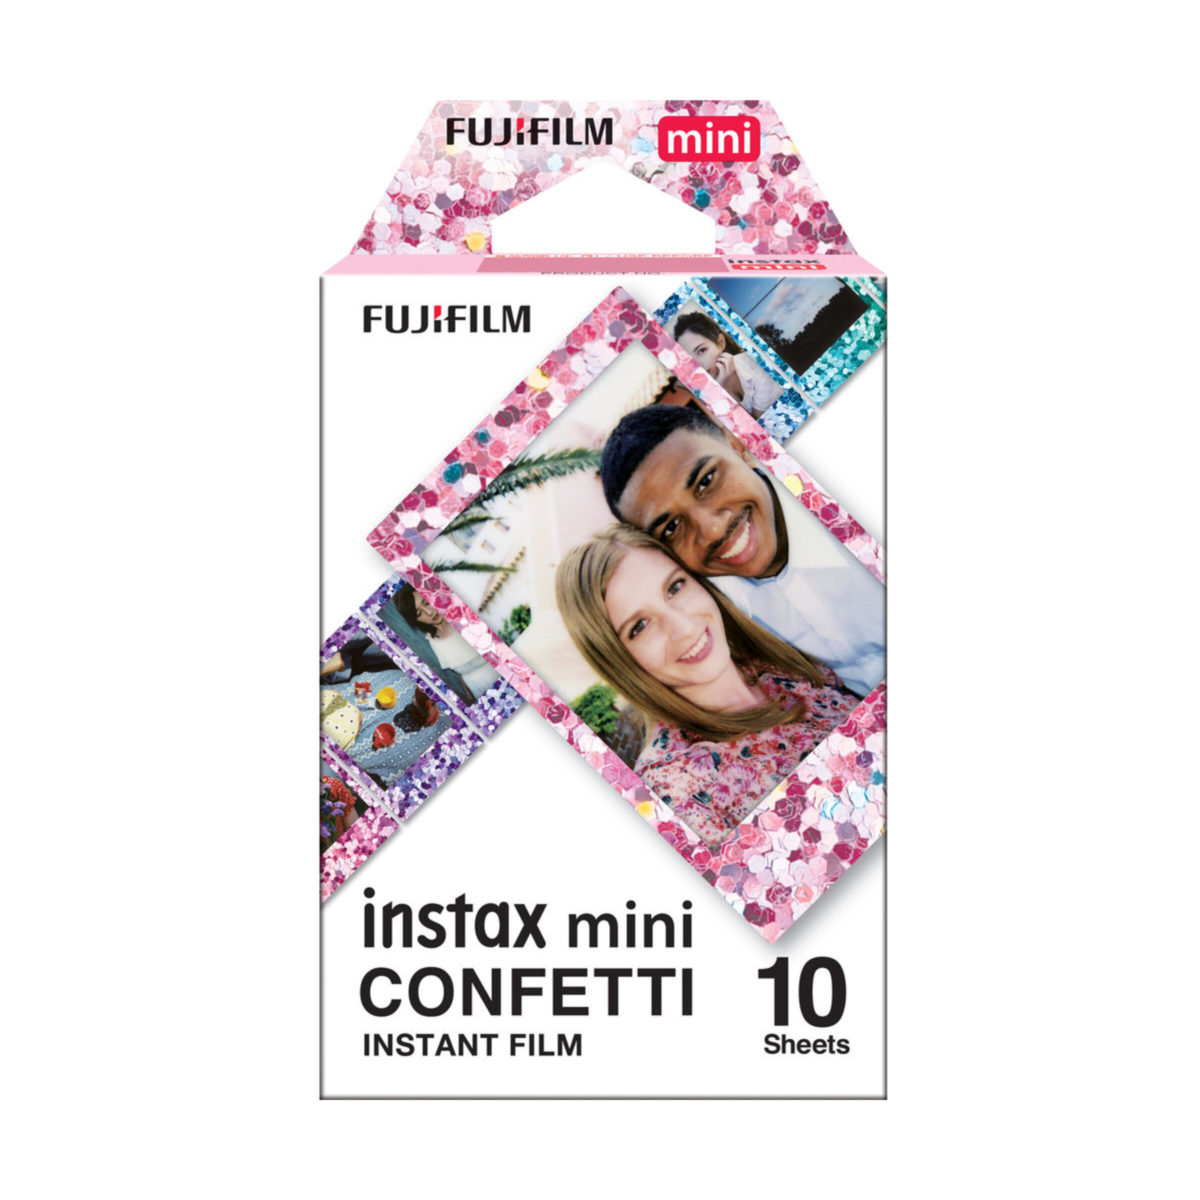 fujifilm_instax_mini_sofortbildfilm_confetti_10_aufn_01